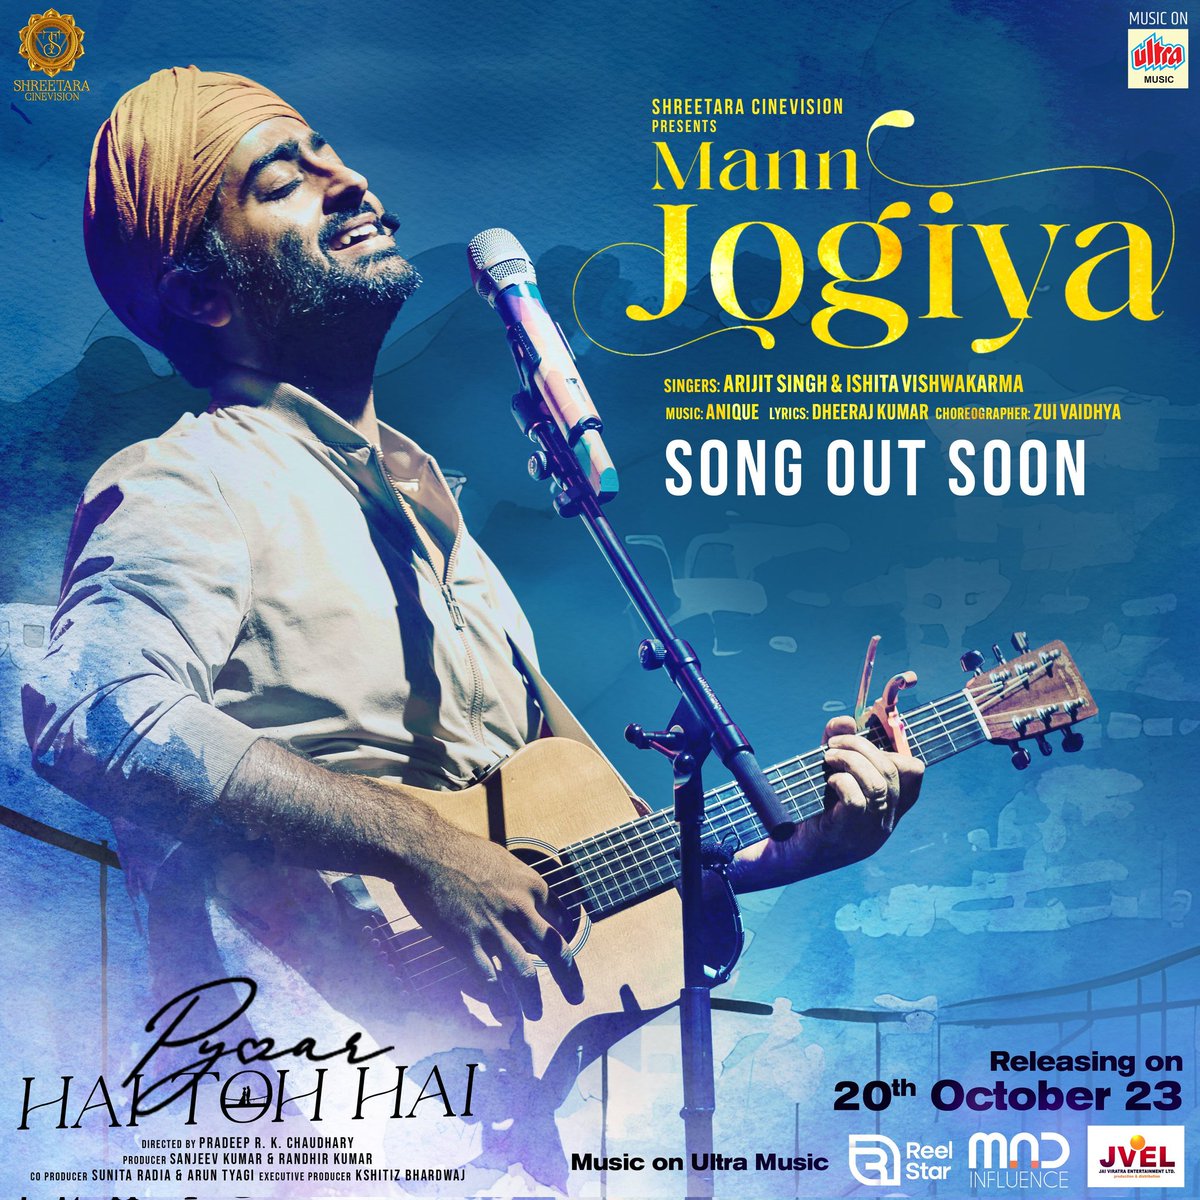 New Song Alert🚨🚨

Movie - #PyaarHaiTohHai
Song - #MannJogiya
Singer - #ArijitSingh
Music by - #Anique
Lyrics - #DheerajKumar
Label - @UltraHindi 

Song Out Soon!!